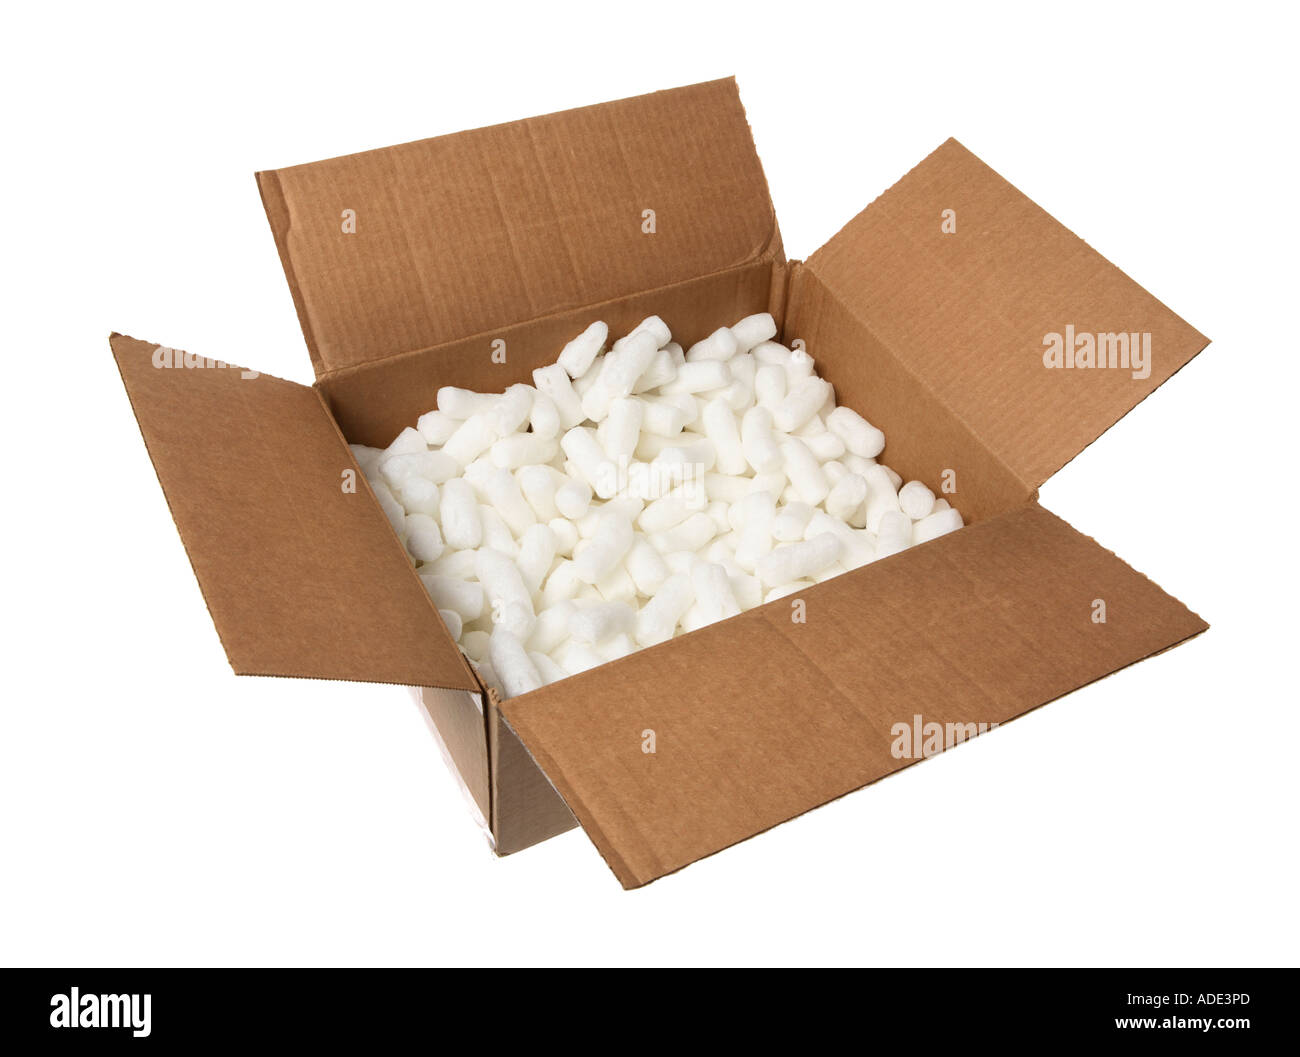 Cardboard box with Styrofoam peanuts Stock Photo